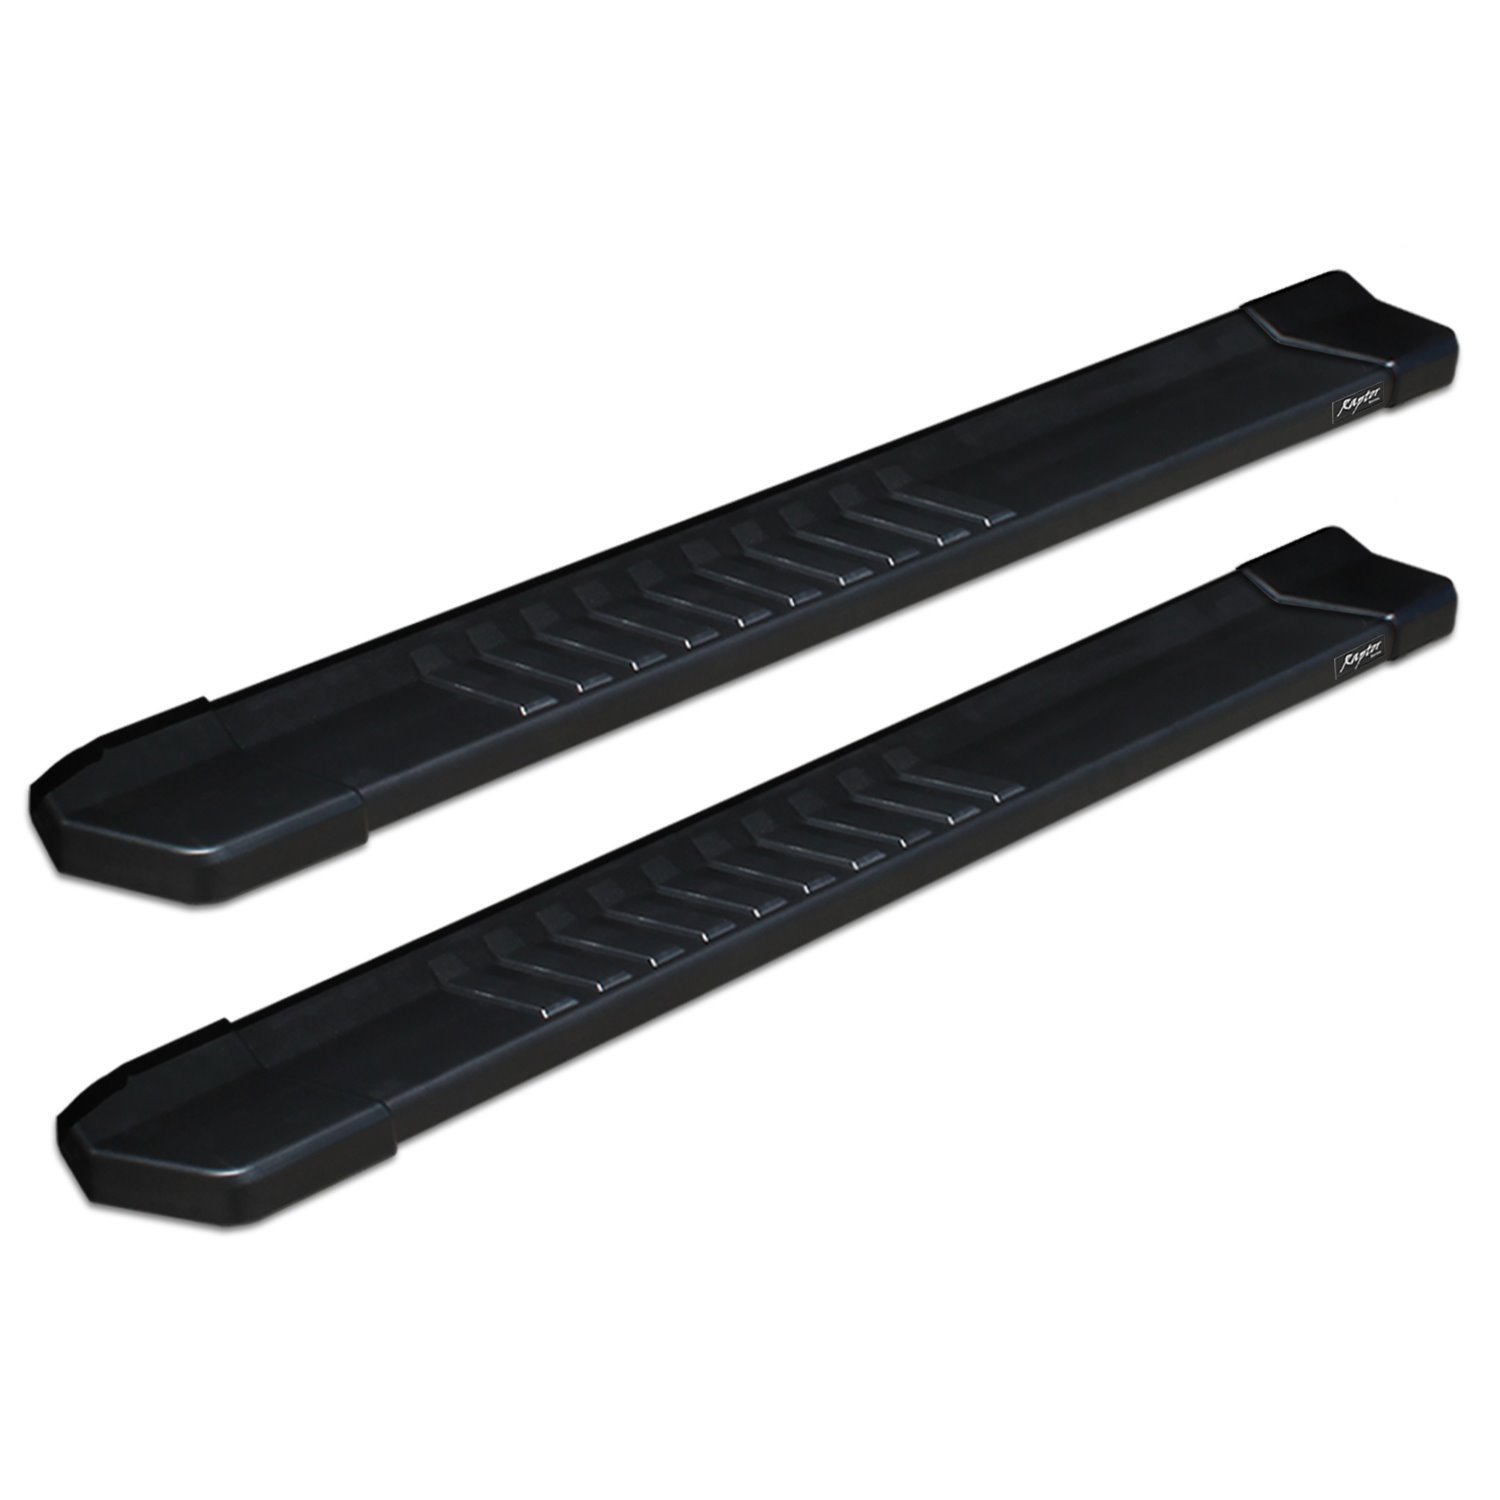 1701-0017BT 6 in OEM Style Slide Track Running Boards, Black Aluminum, Fits Select Chevy Silverado/GMC Sierra 1500/2500/3500